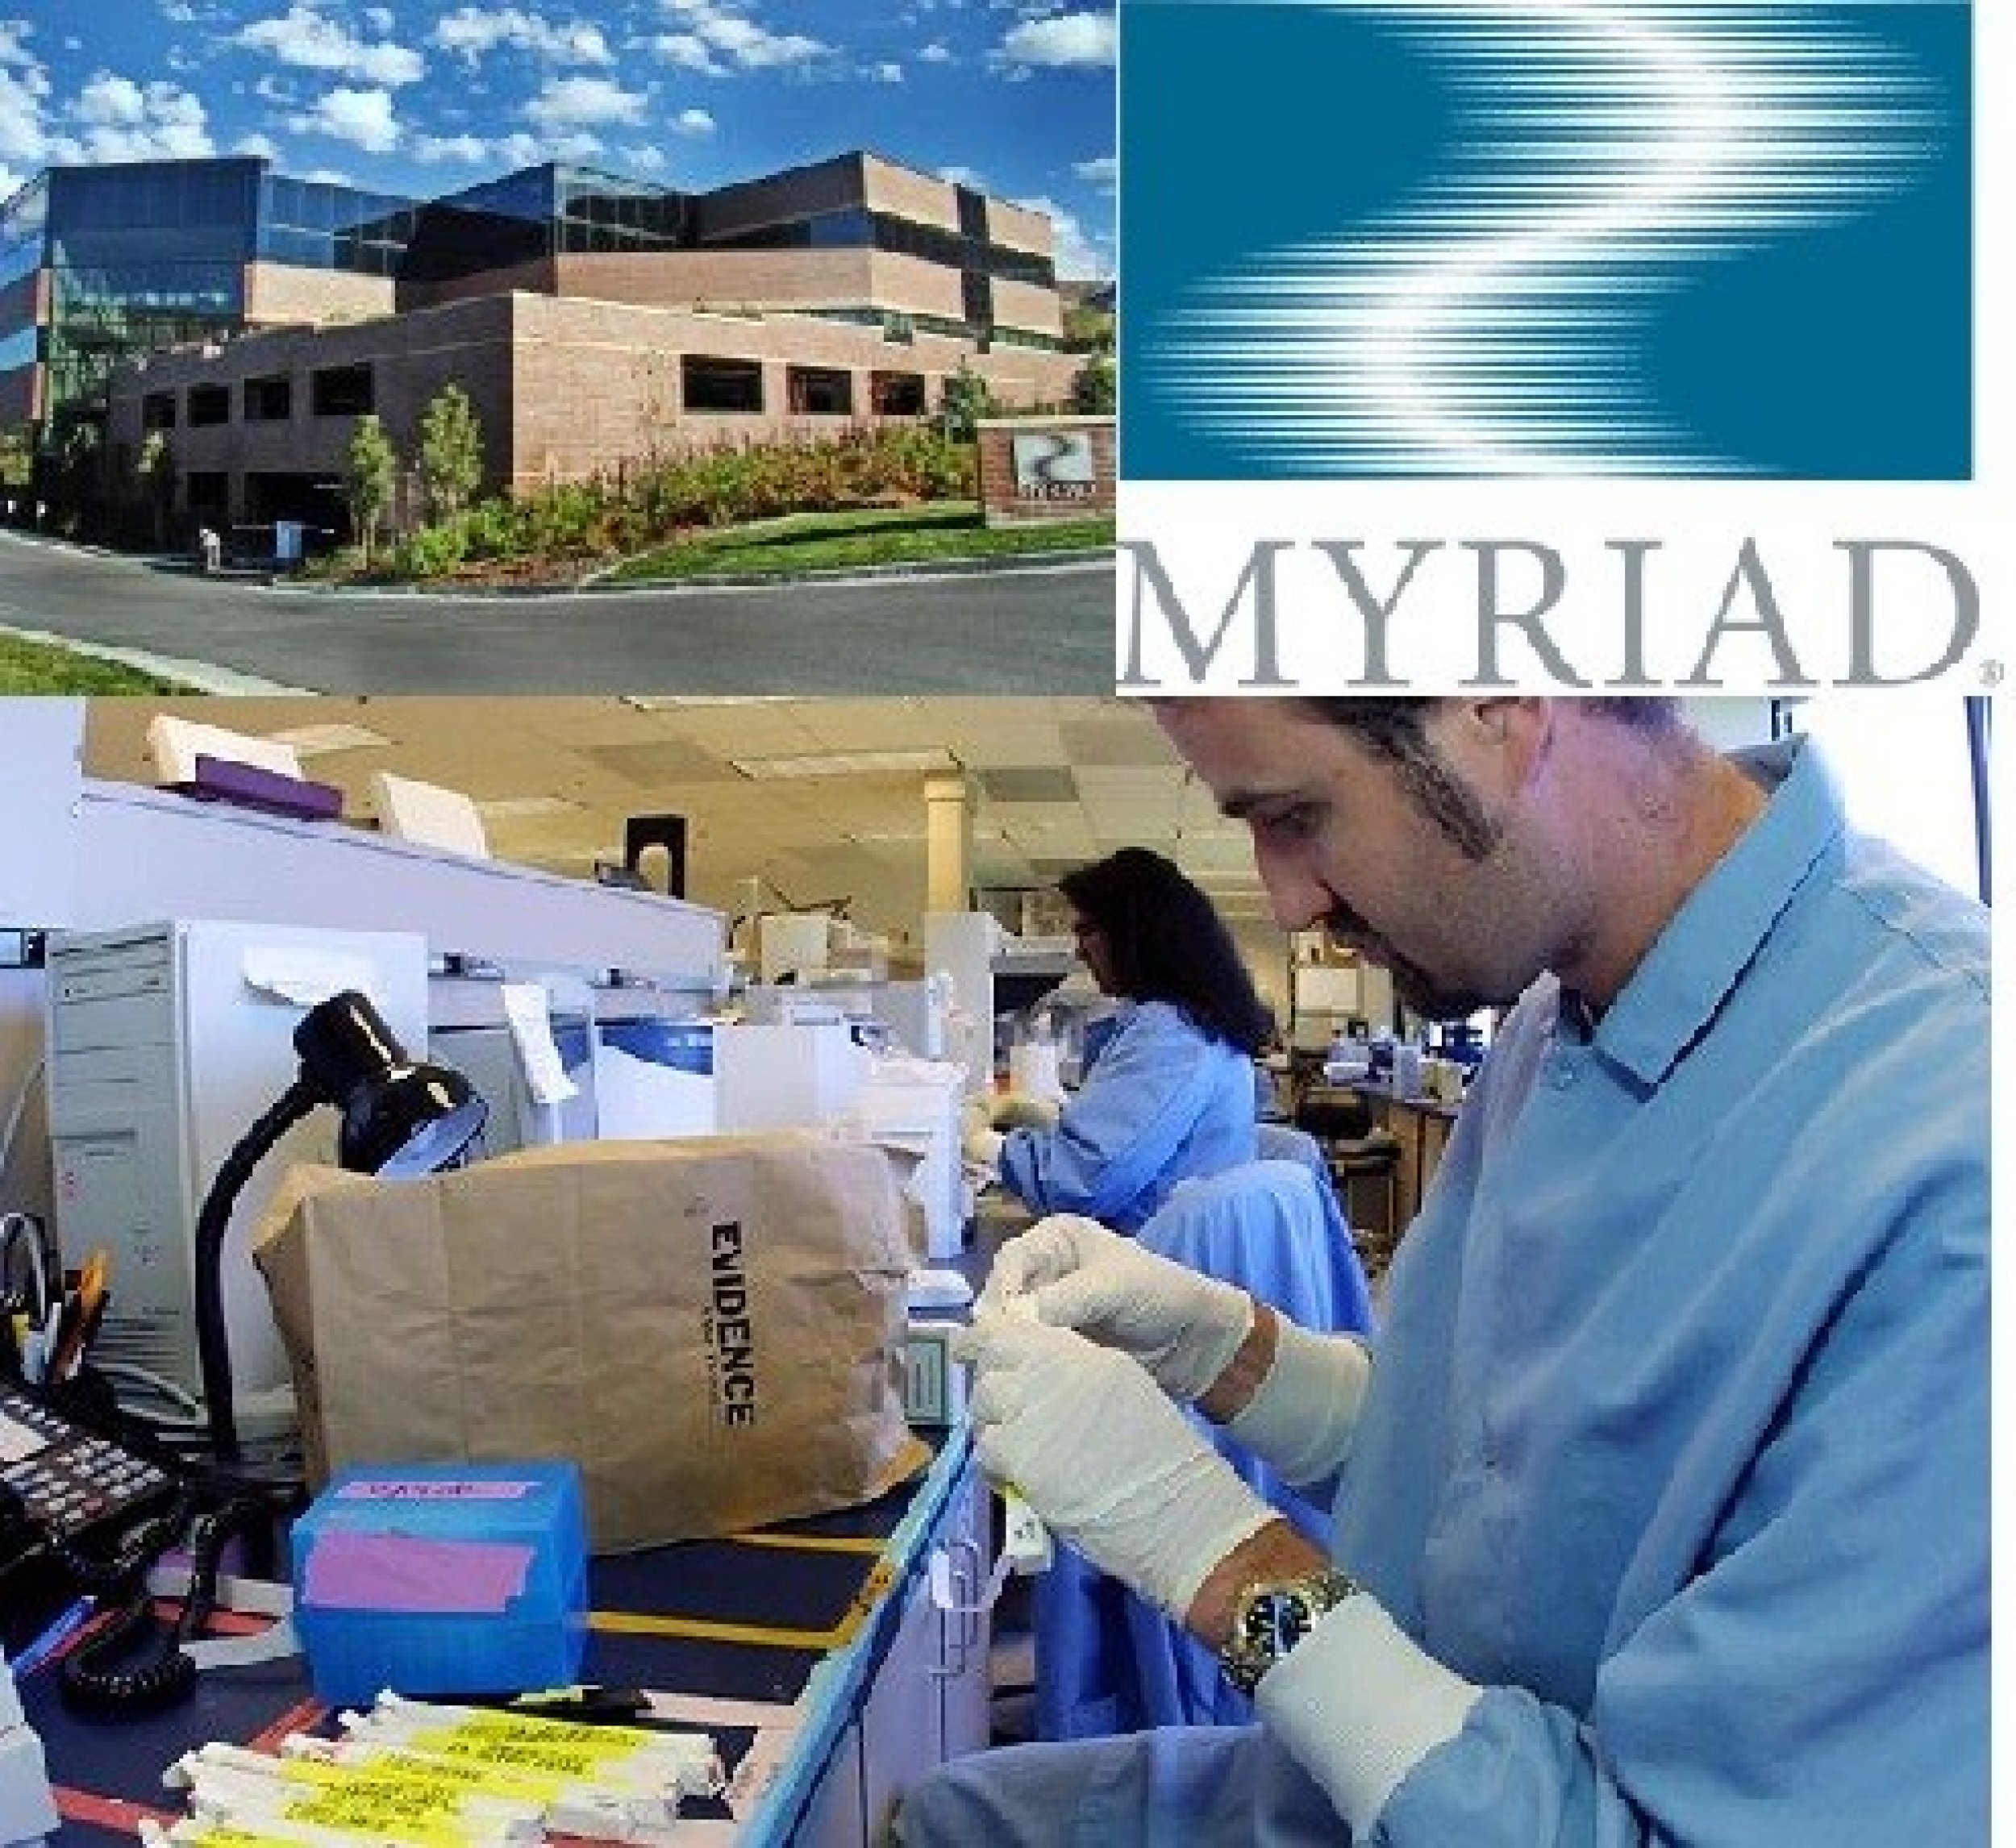 Myriad Patent Appeal Case Arguments Begin April 4